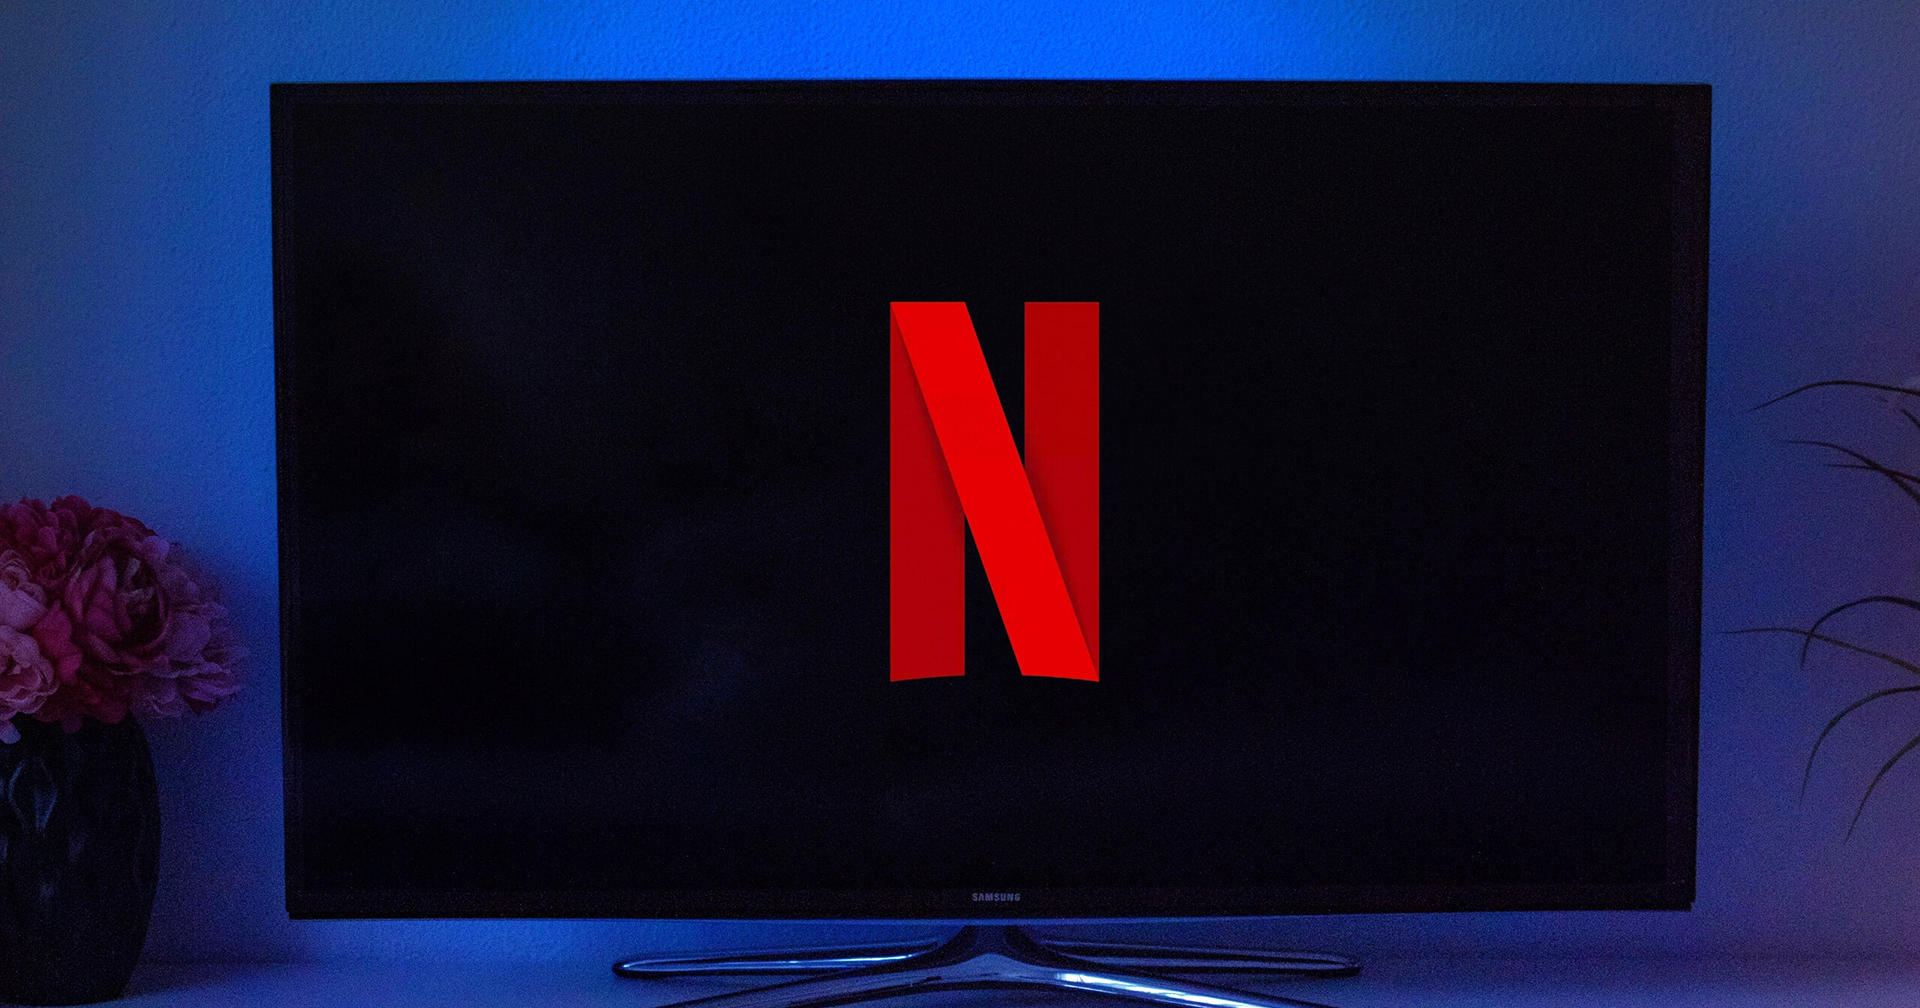 Reed Hastings ประกาศวางมือจากตำแหน่งซีอีโอ Netflix หลังกำไรลดลงมากถึง 90%